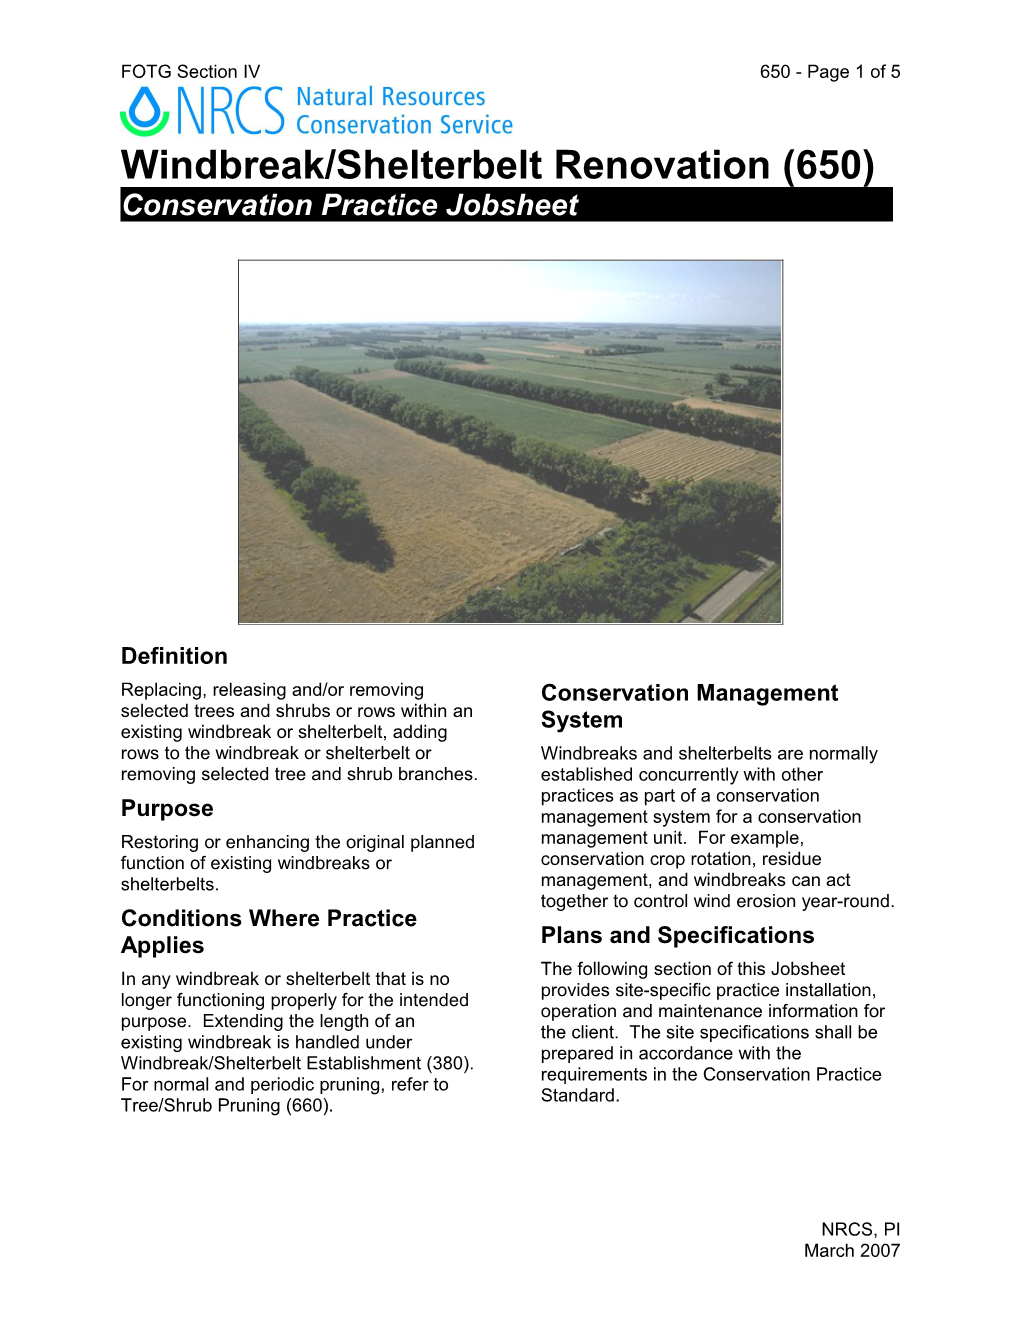 Windbreak/Shelterbelt Renovation